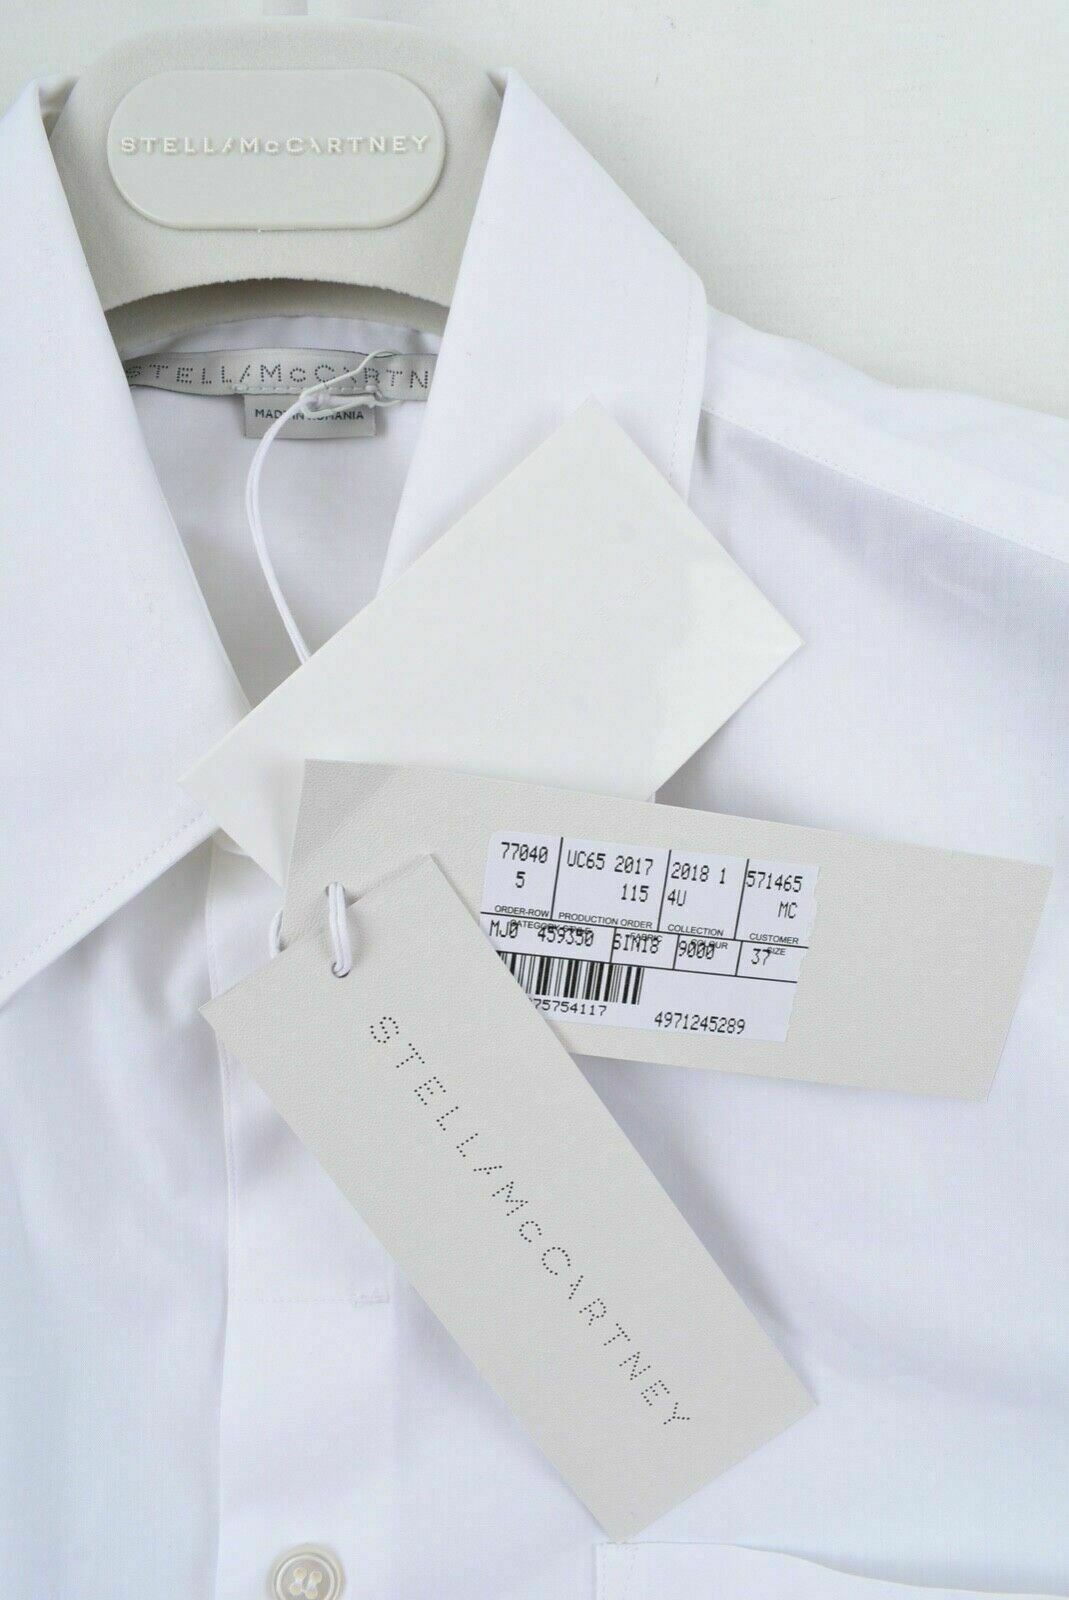 STELLA MCCARTNEY Men's White Long Sleeve Shirt size collar 14.5"  IT 37